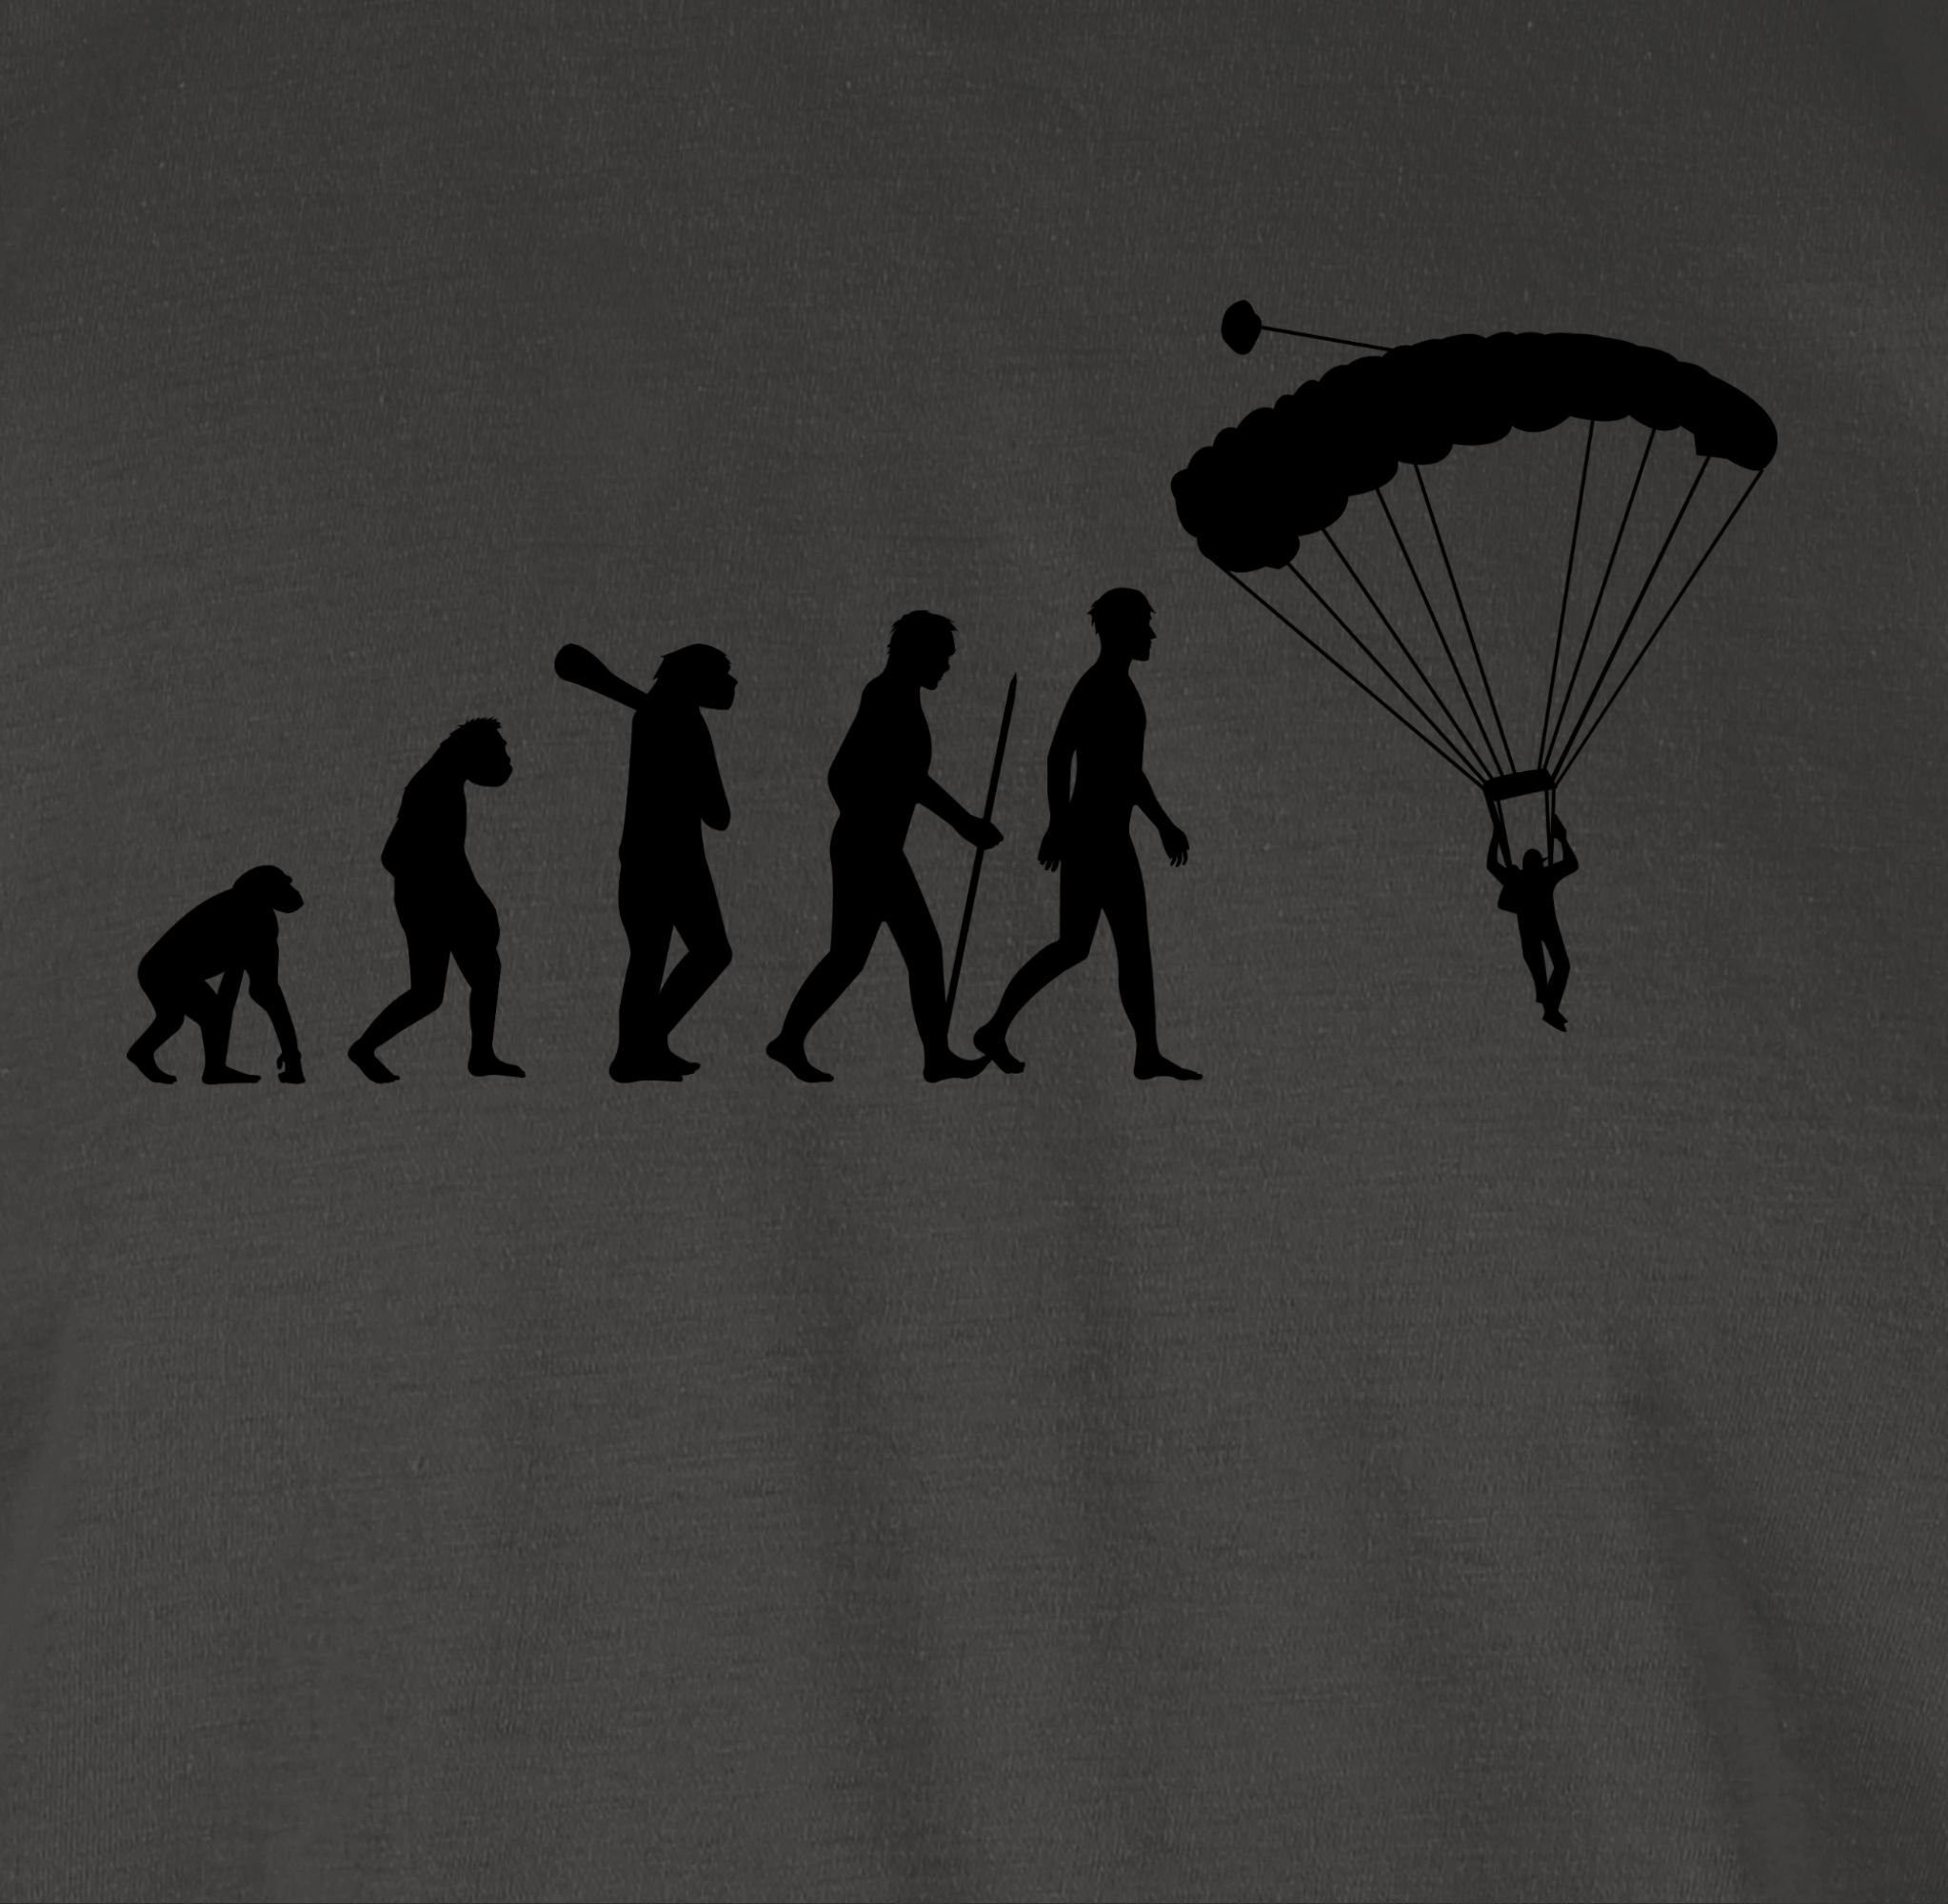 1 Evolution T-Shirt - evolution Premium tshirt - Fallschirmspringen Herren Dunkelgrau - - fallschirm fallschirmsprung Evolution T-Shirt Outfit Shirtracer gleitschirm